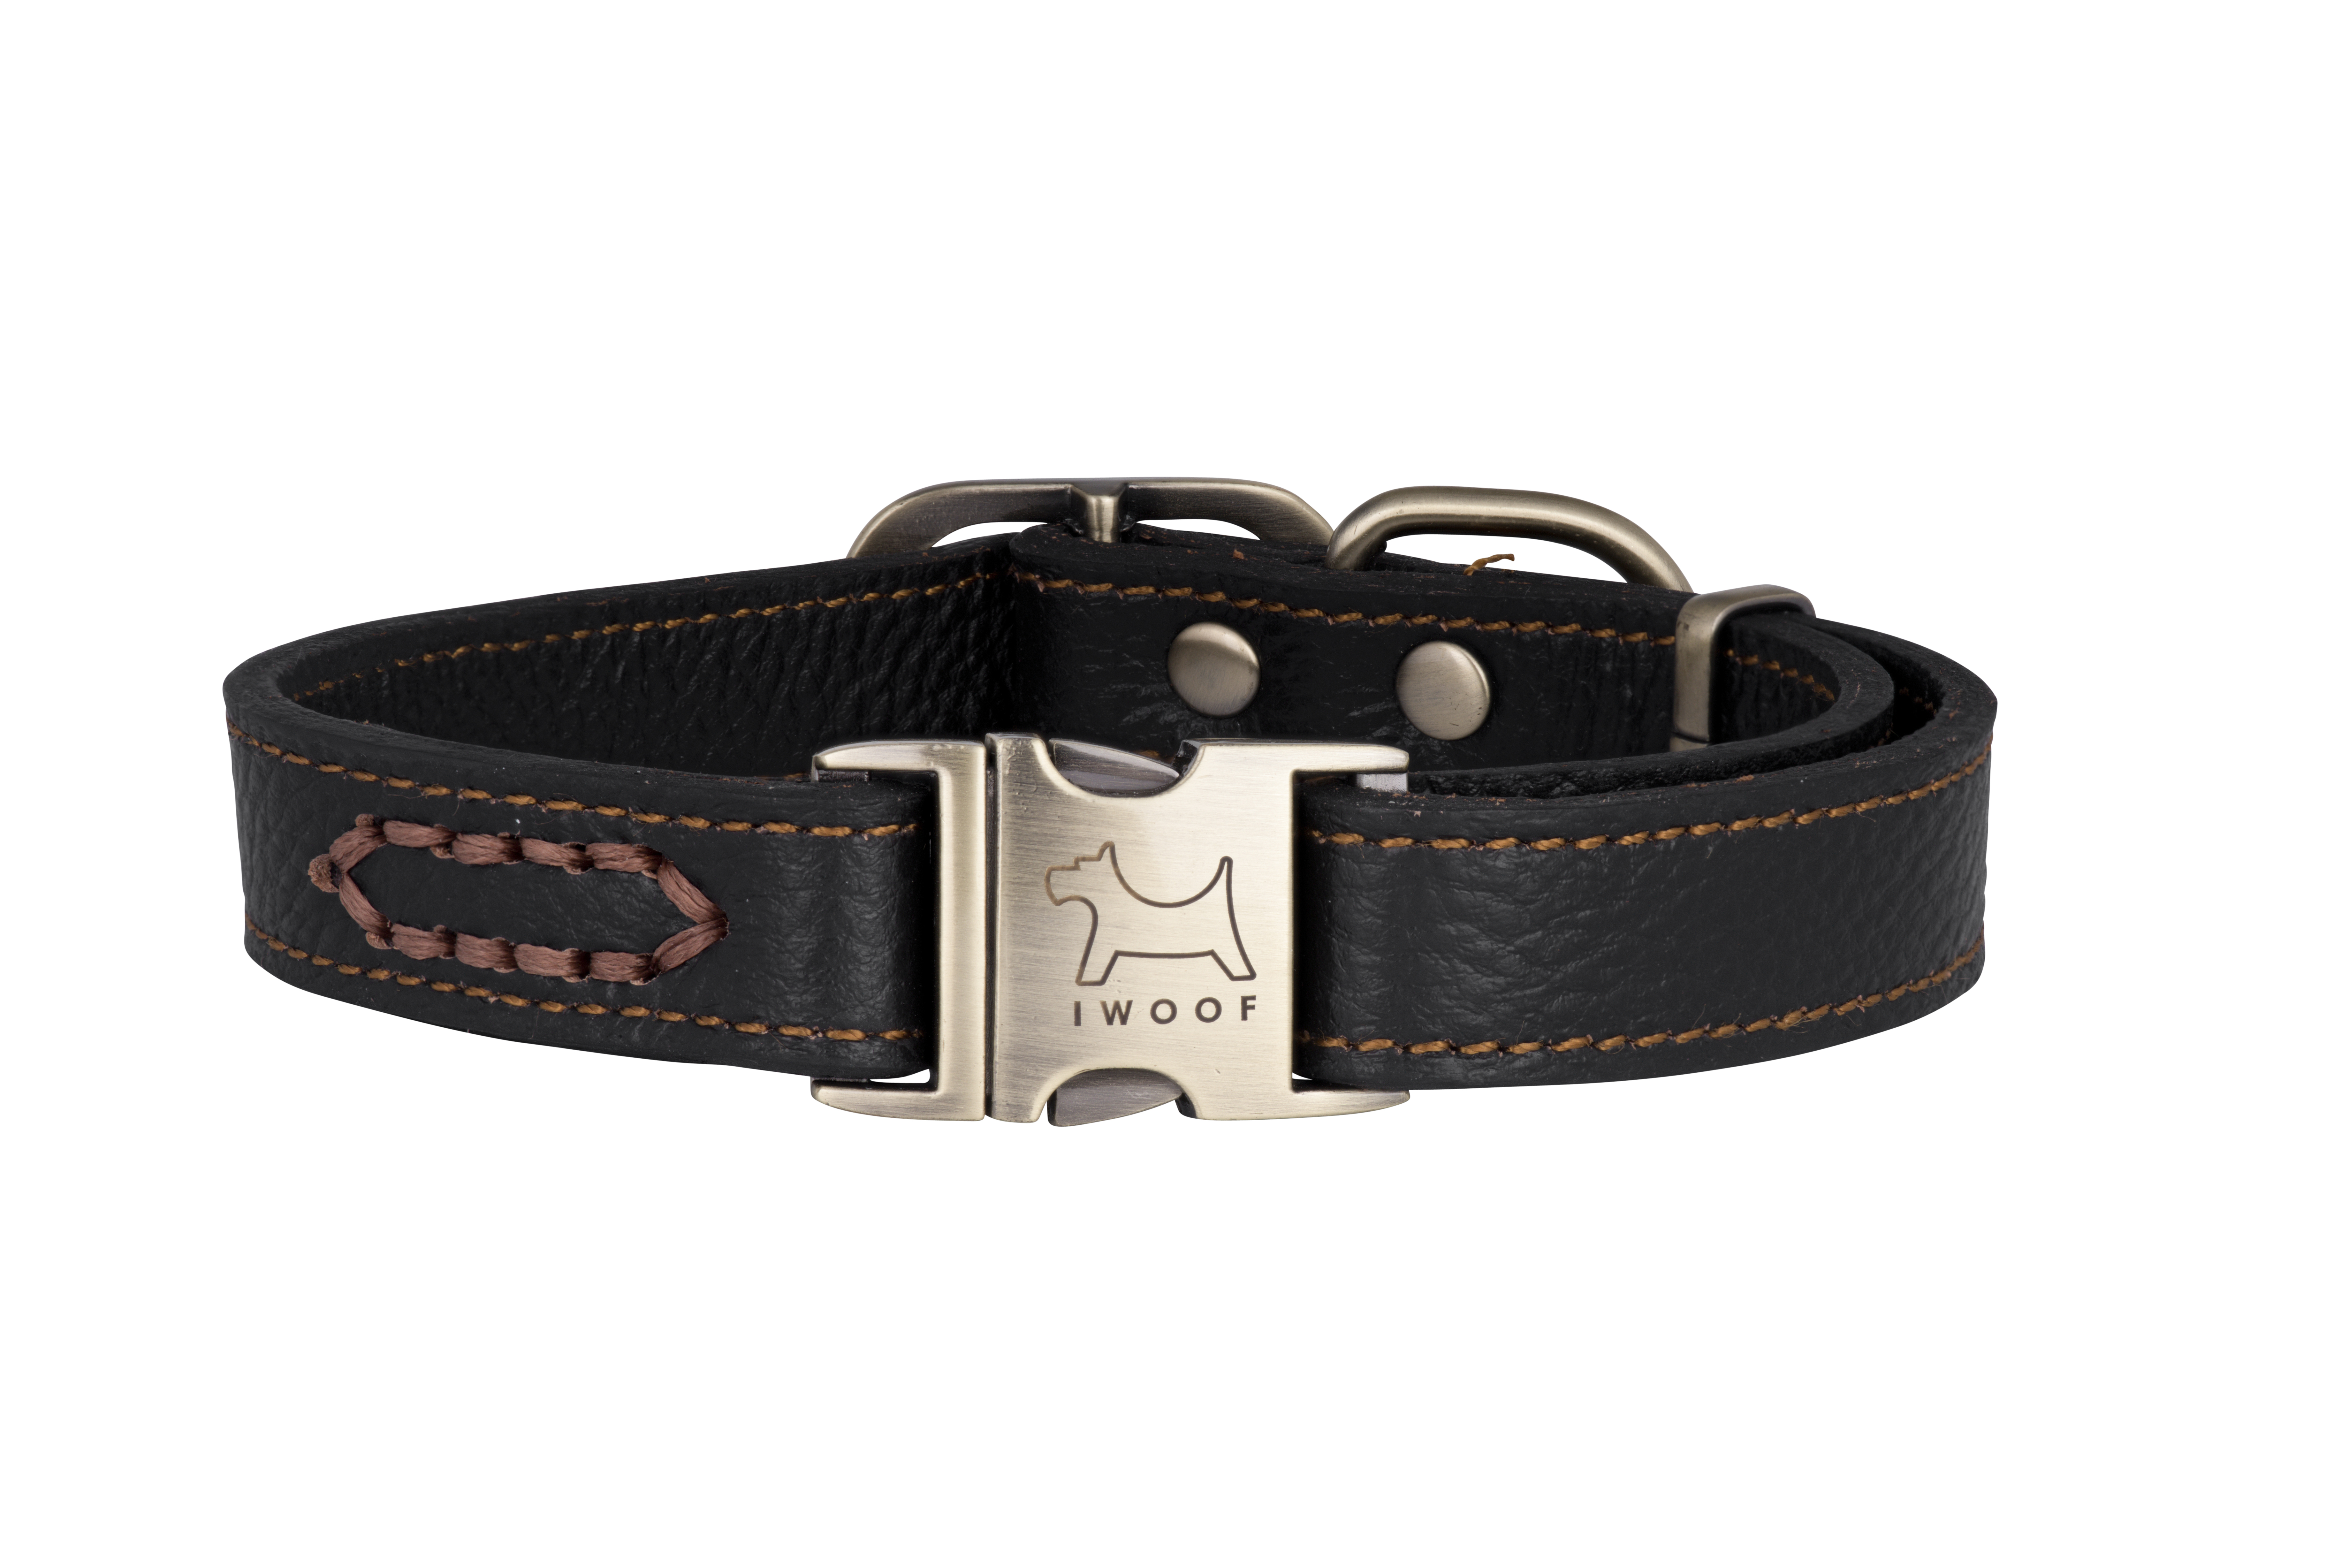 Royal Black designer leather dog collar and matching leather designer dog lead by IWOOF